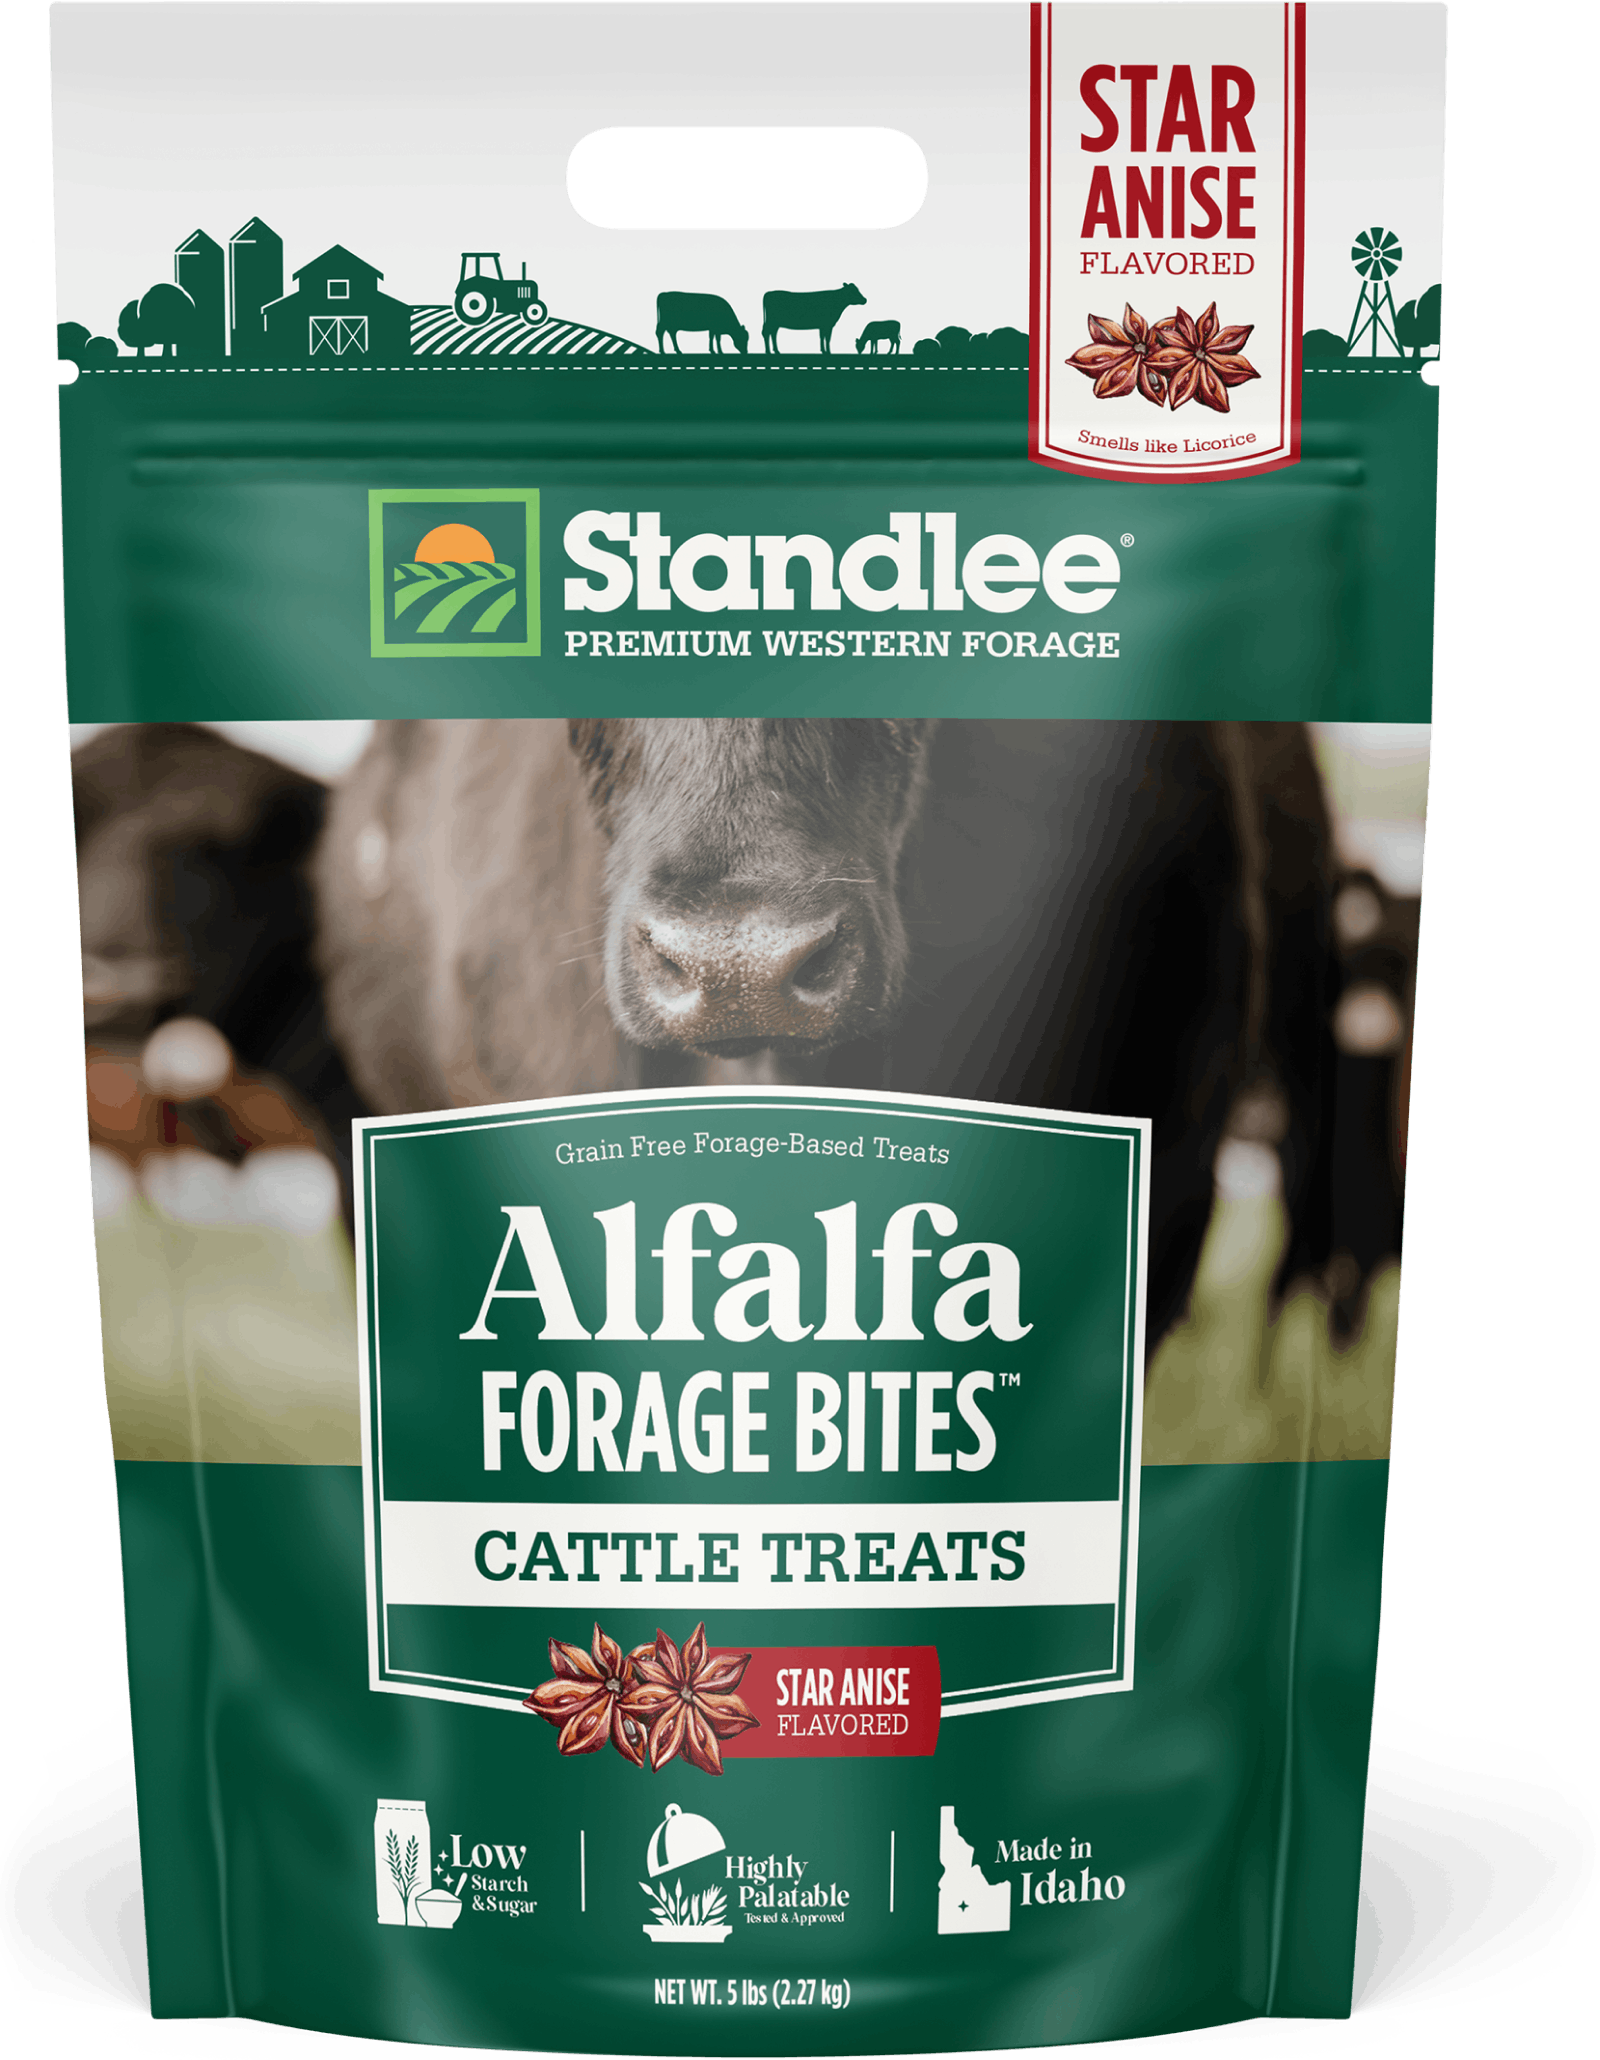 Alfalfa Forage Bites - Cattle Treats